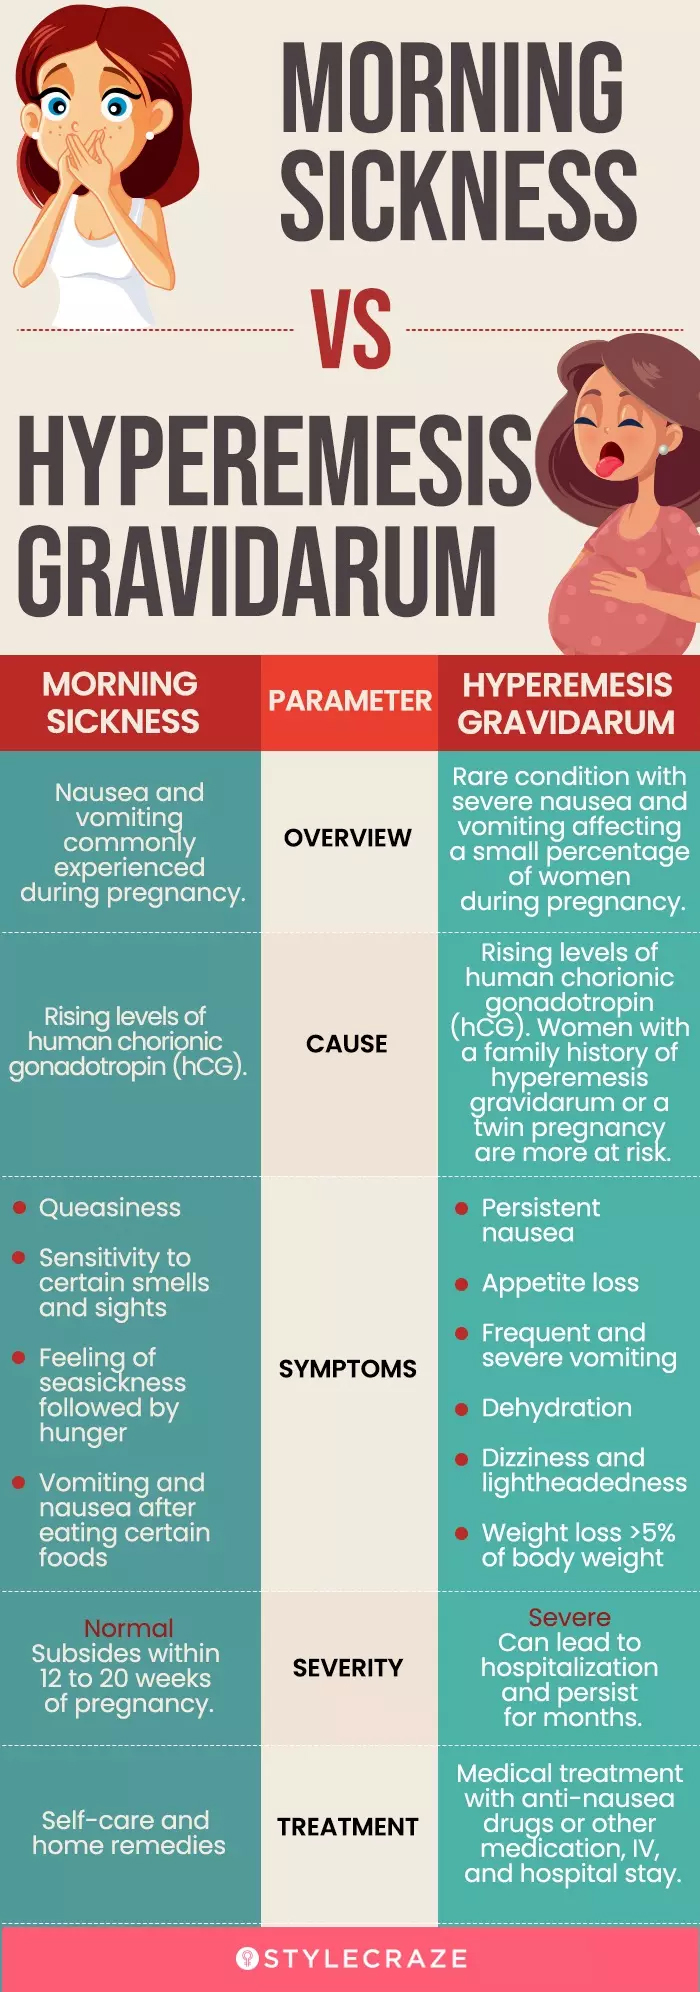 morning sickness vs. hyperemesis gravidarum (infographic)